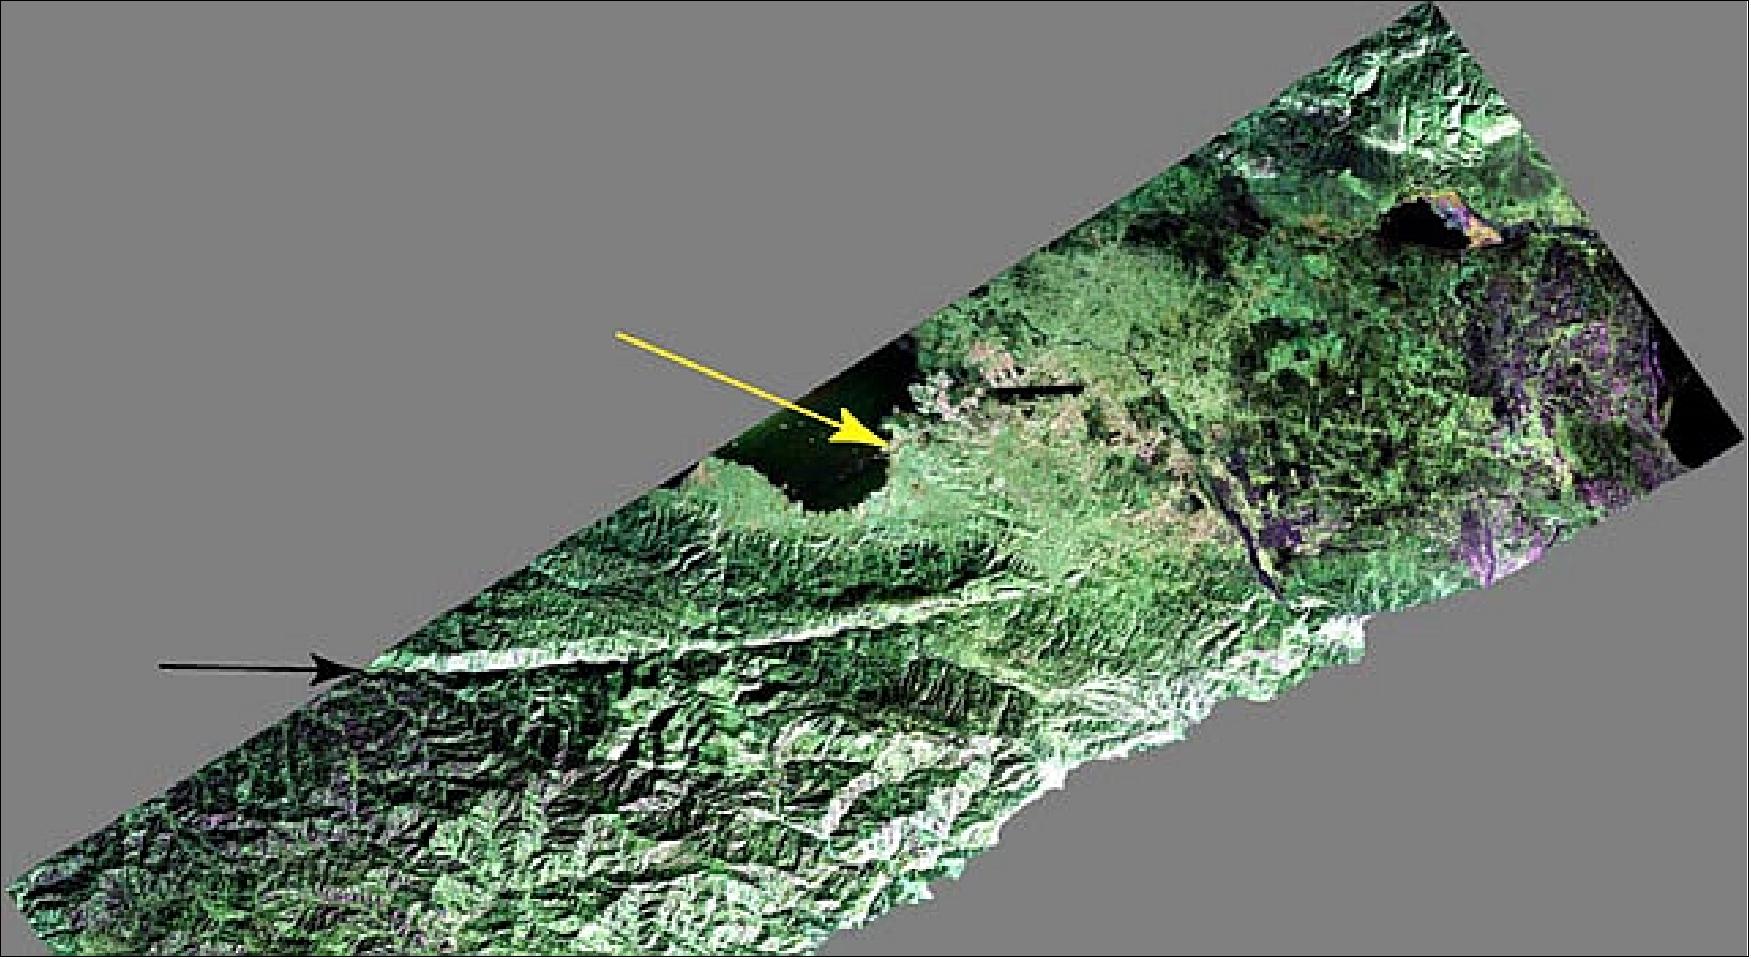 Figure 16: False-color composite image of the Port-au-Prince, Haiti region, taken Jan. 27, 2010 by the UAVSAR airborne radar (image credit: NASA/JPL) 24)